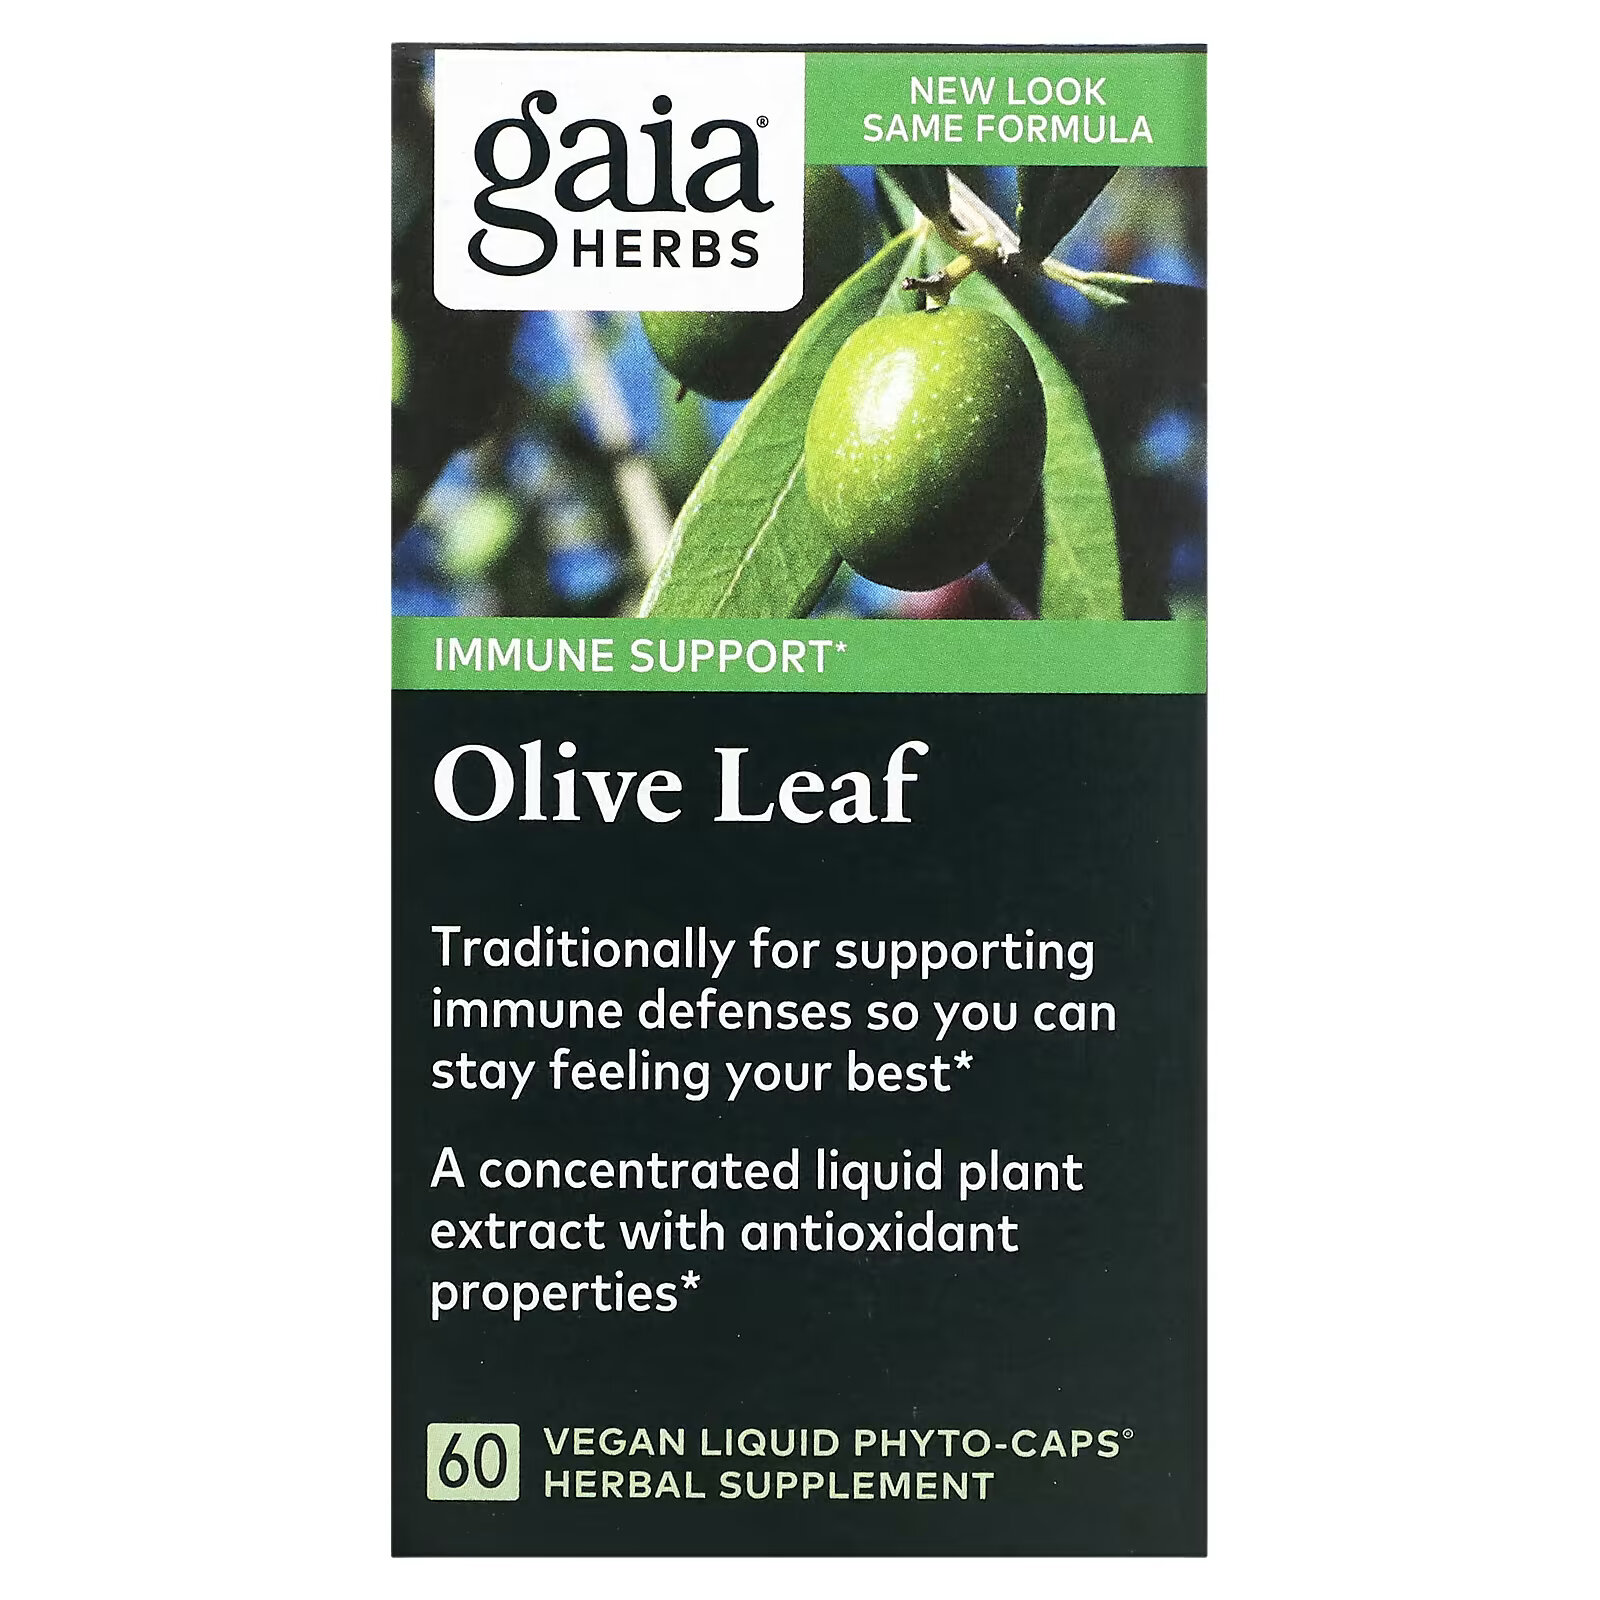 Gaia Herbs, Листья оливы, 60 веганских капсул Liquid Phyto-Caps gaia herbs семена расторопши 60 веганских капсул с жидким содержимым liquid phyto cap